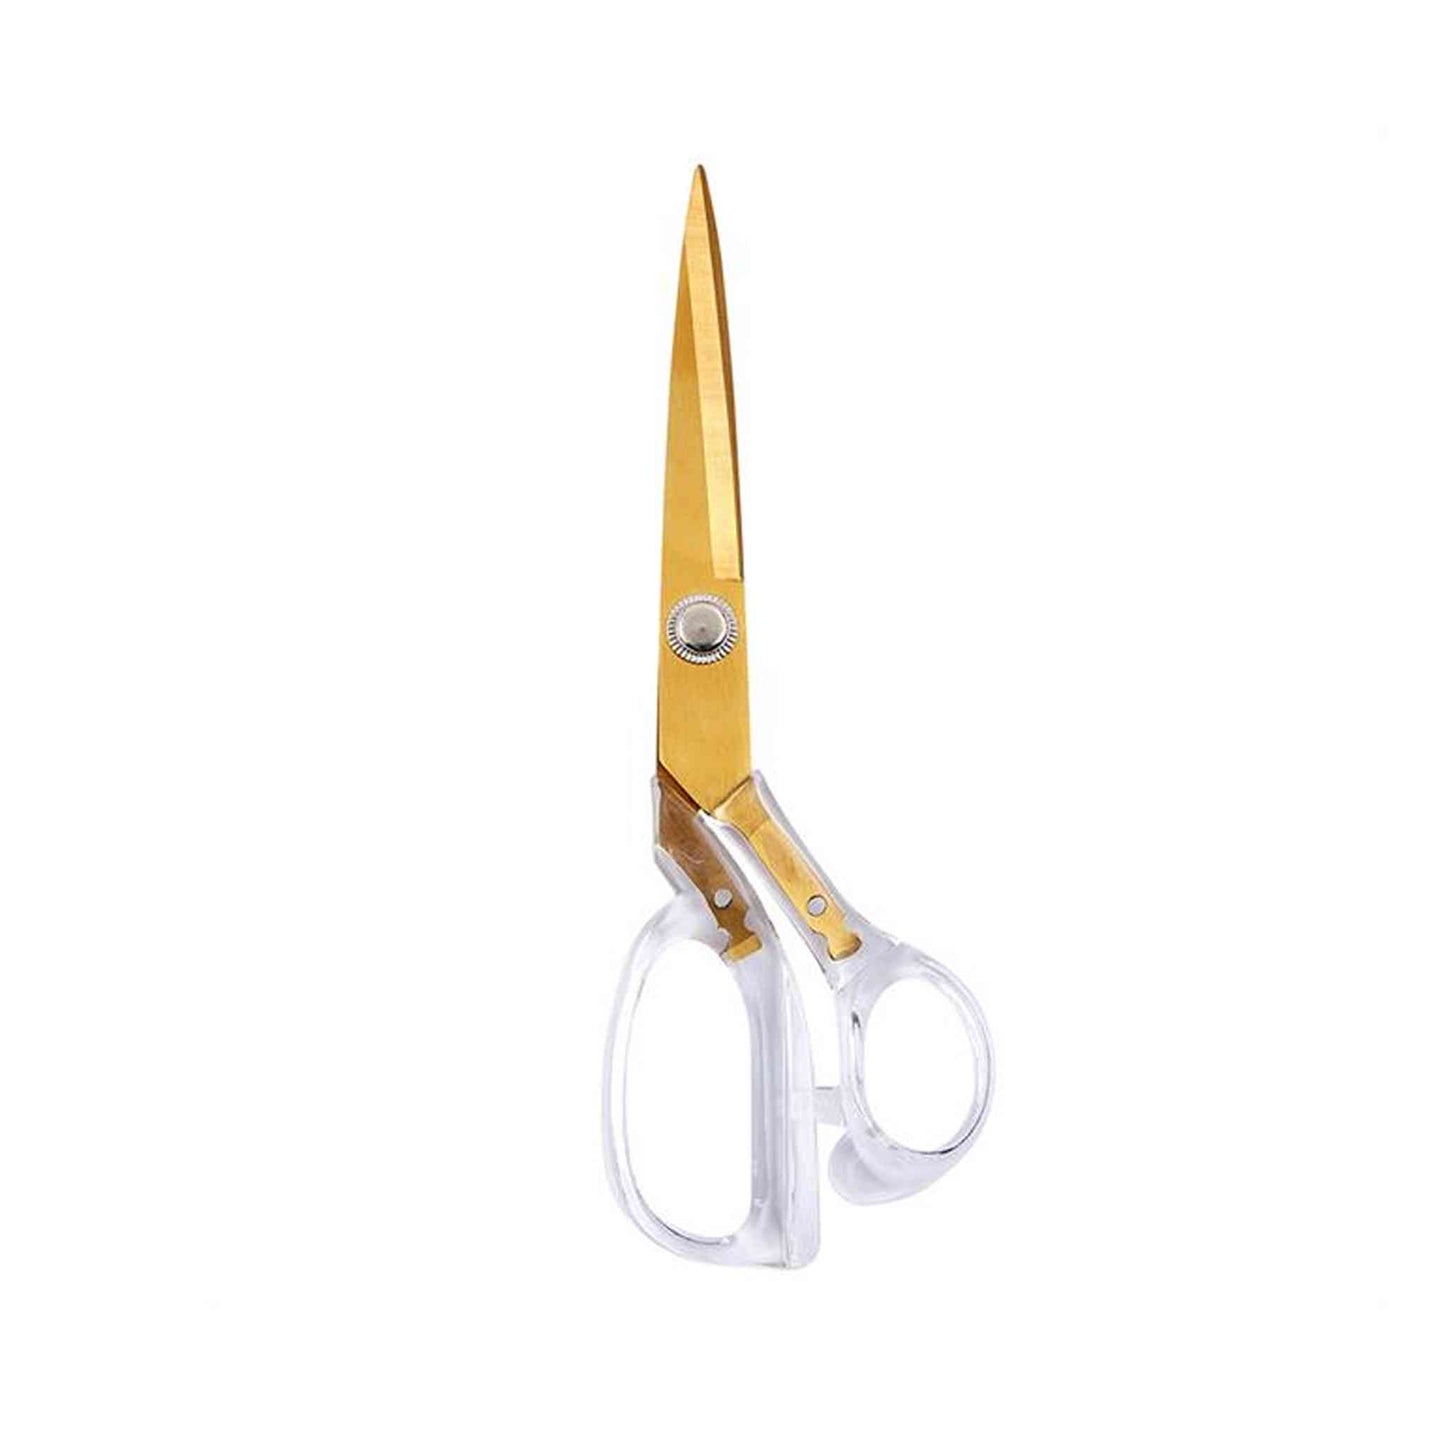 Klasse branded dressmaking scissors with 210mm / 8.25 Inch length. Transparent plastic handle, gold finish metal blades. No packaging photo.